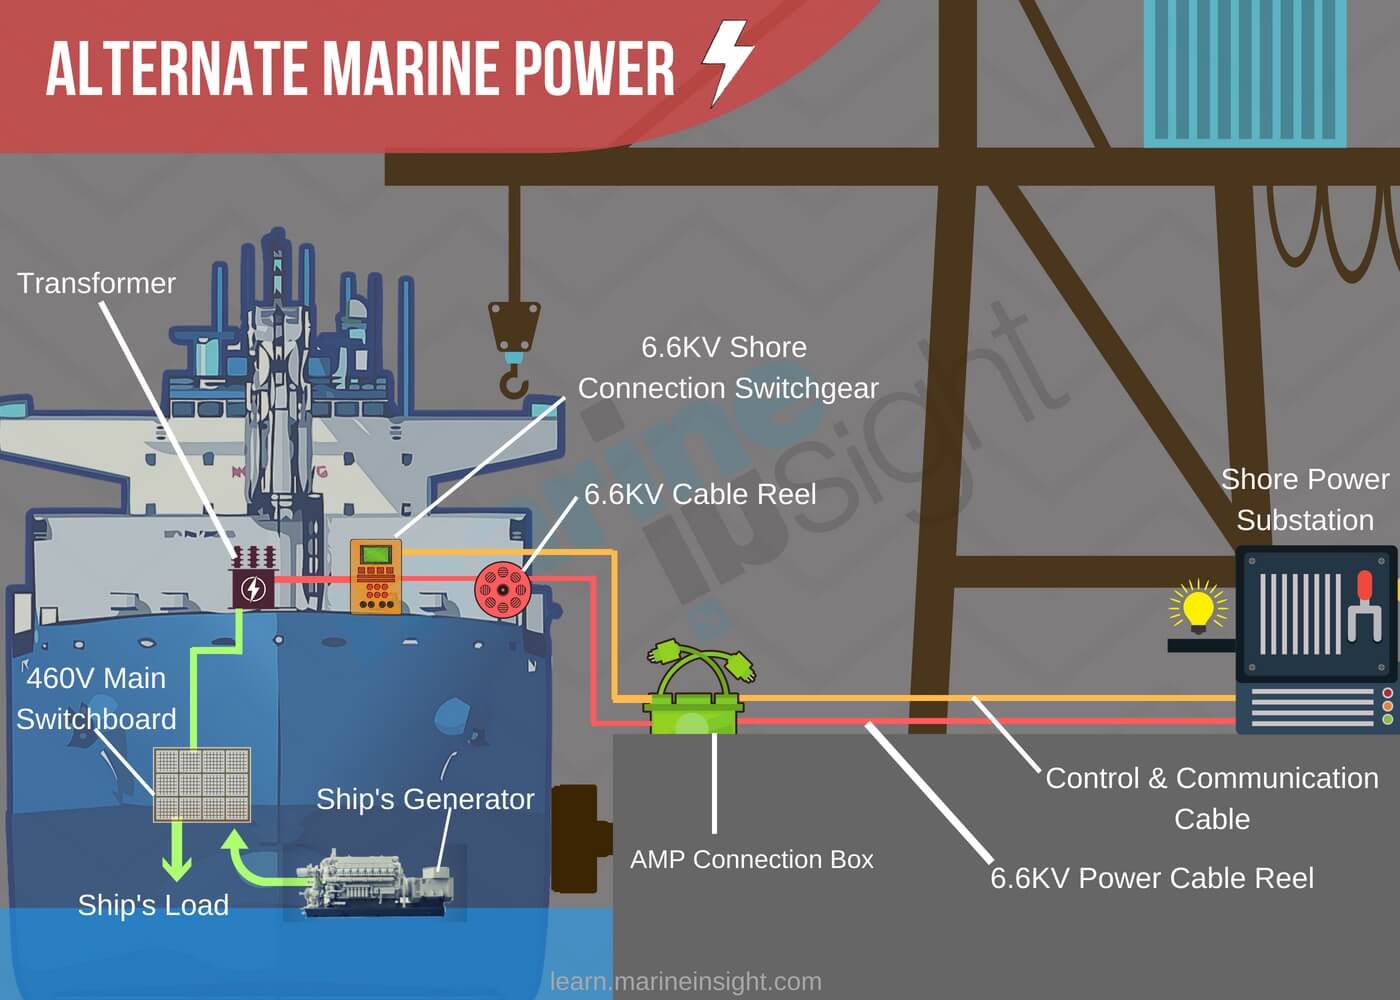 Alternate Marine Power - AMP